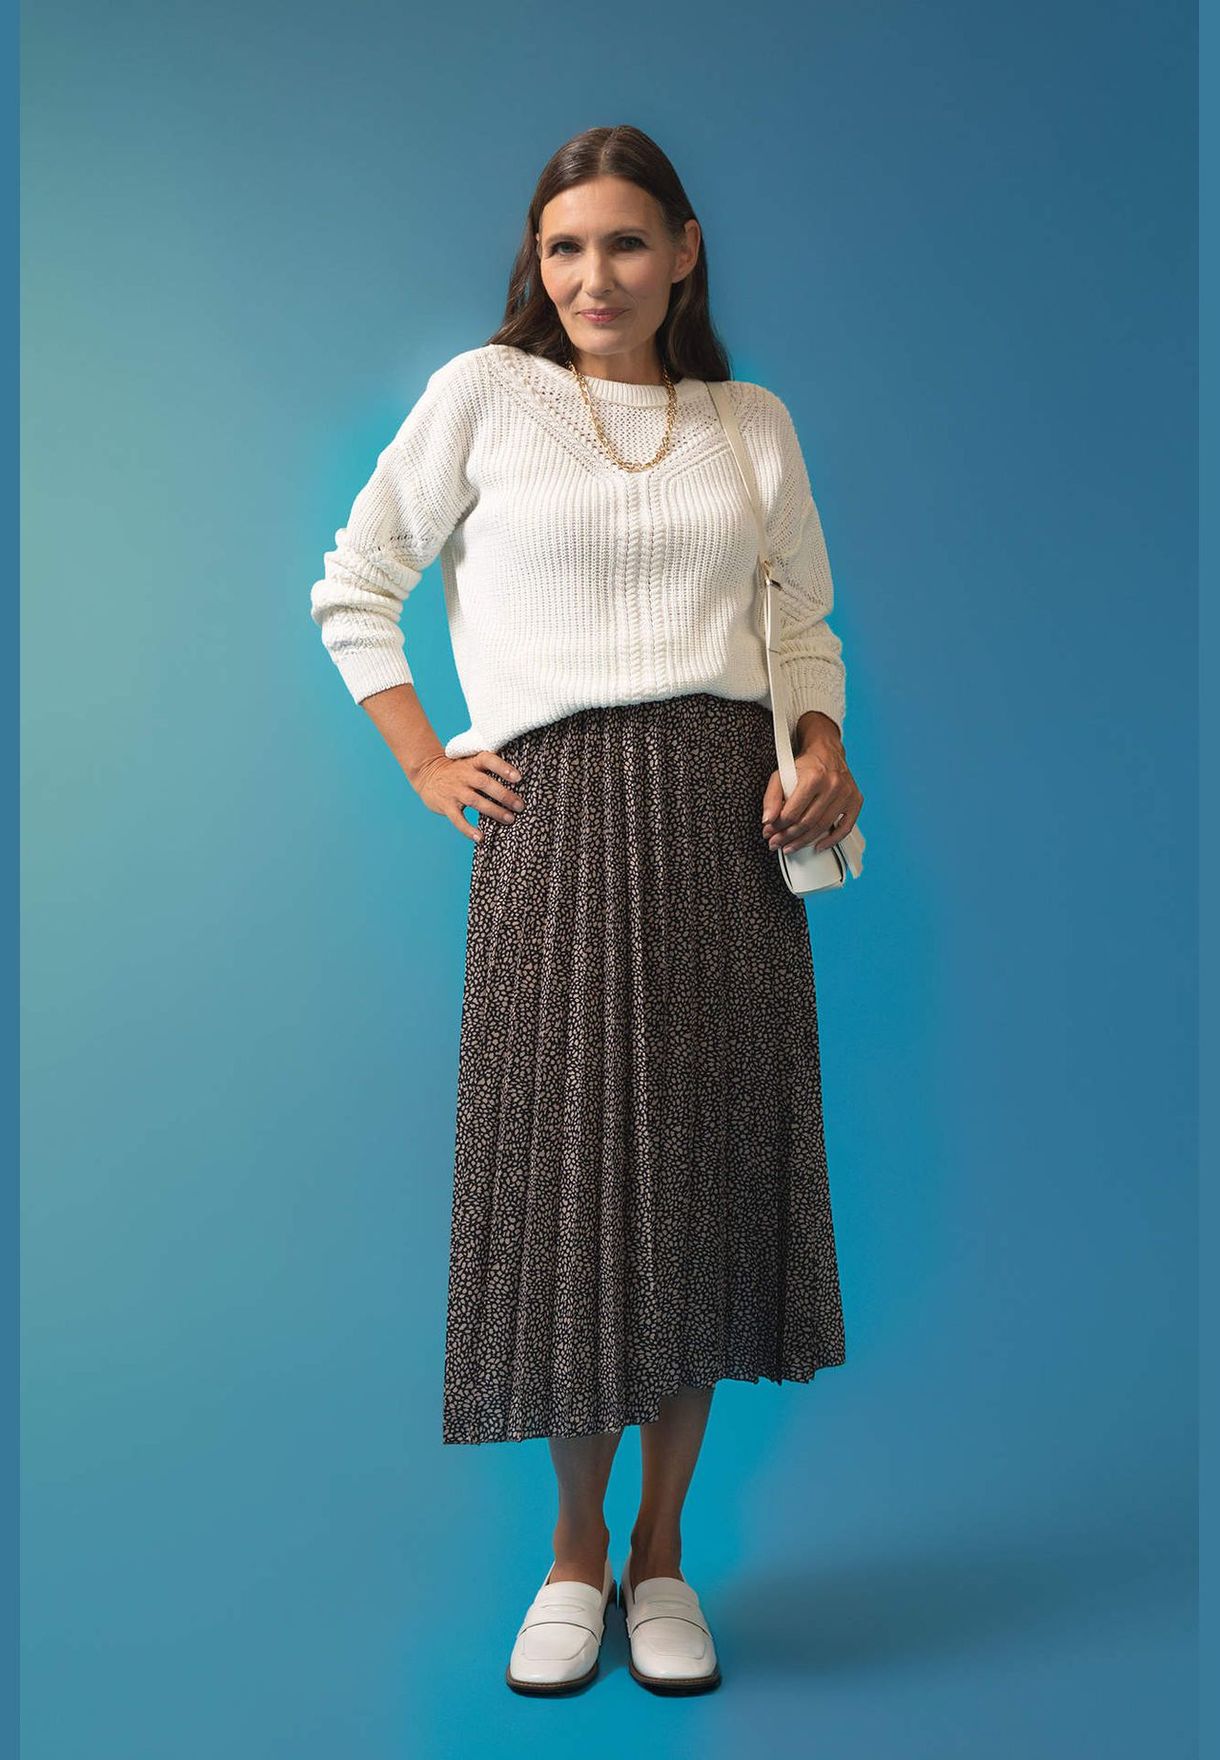 Woman Flower Pattern Skirt